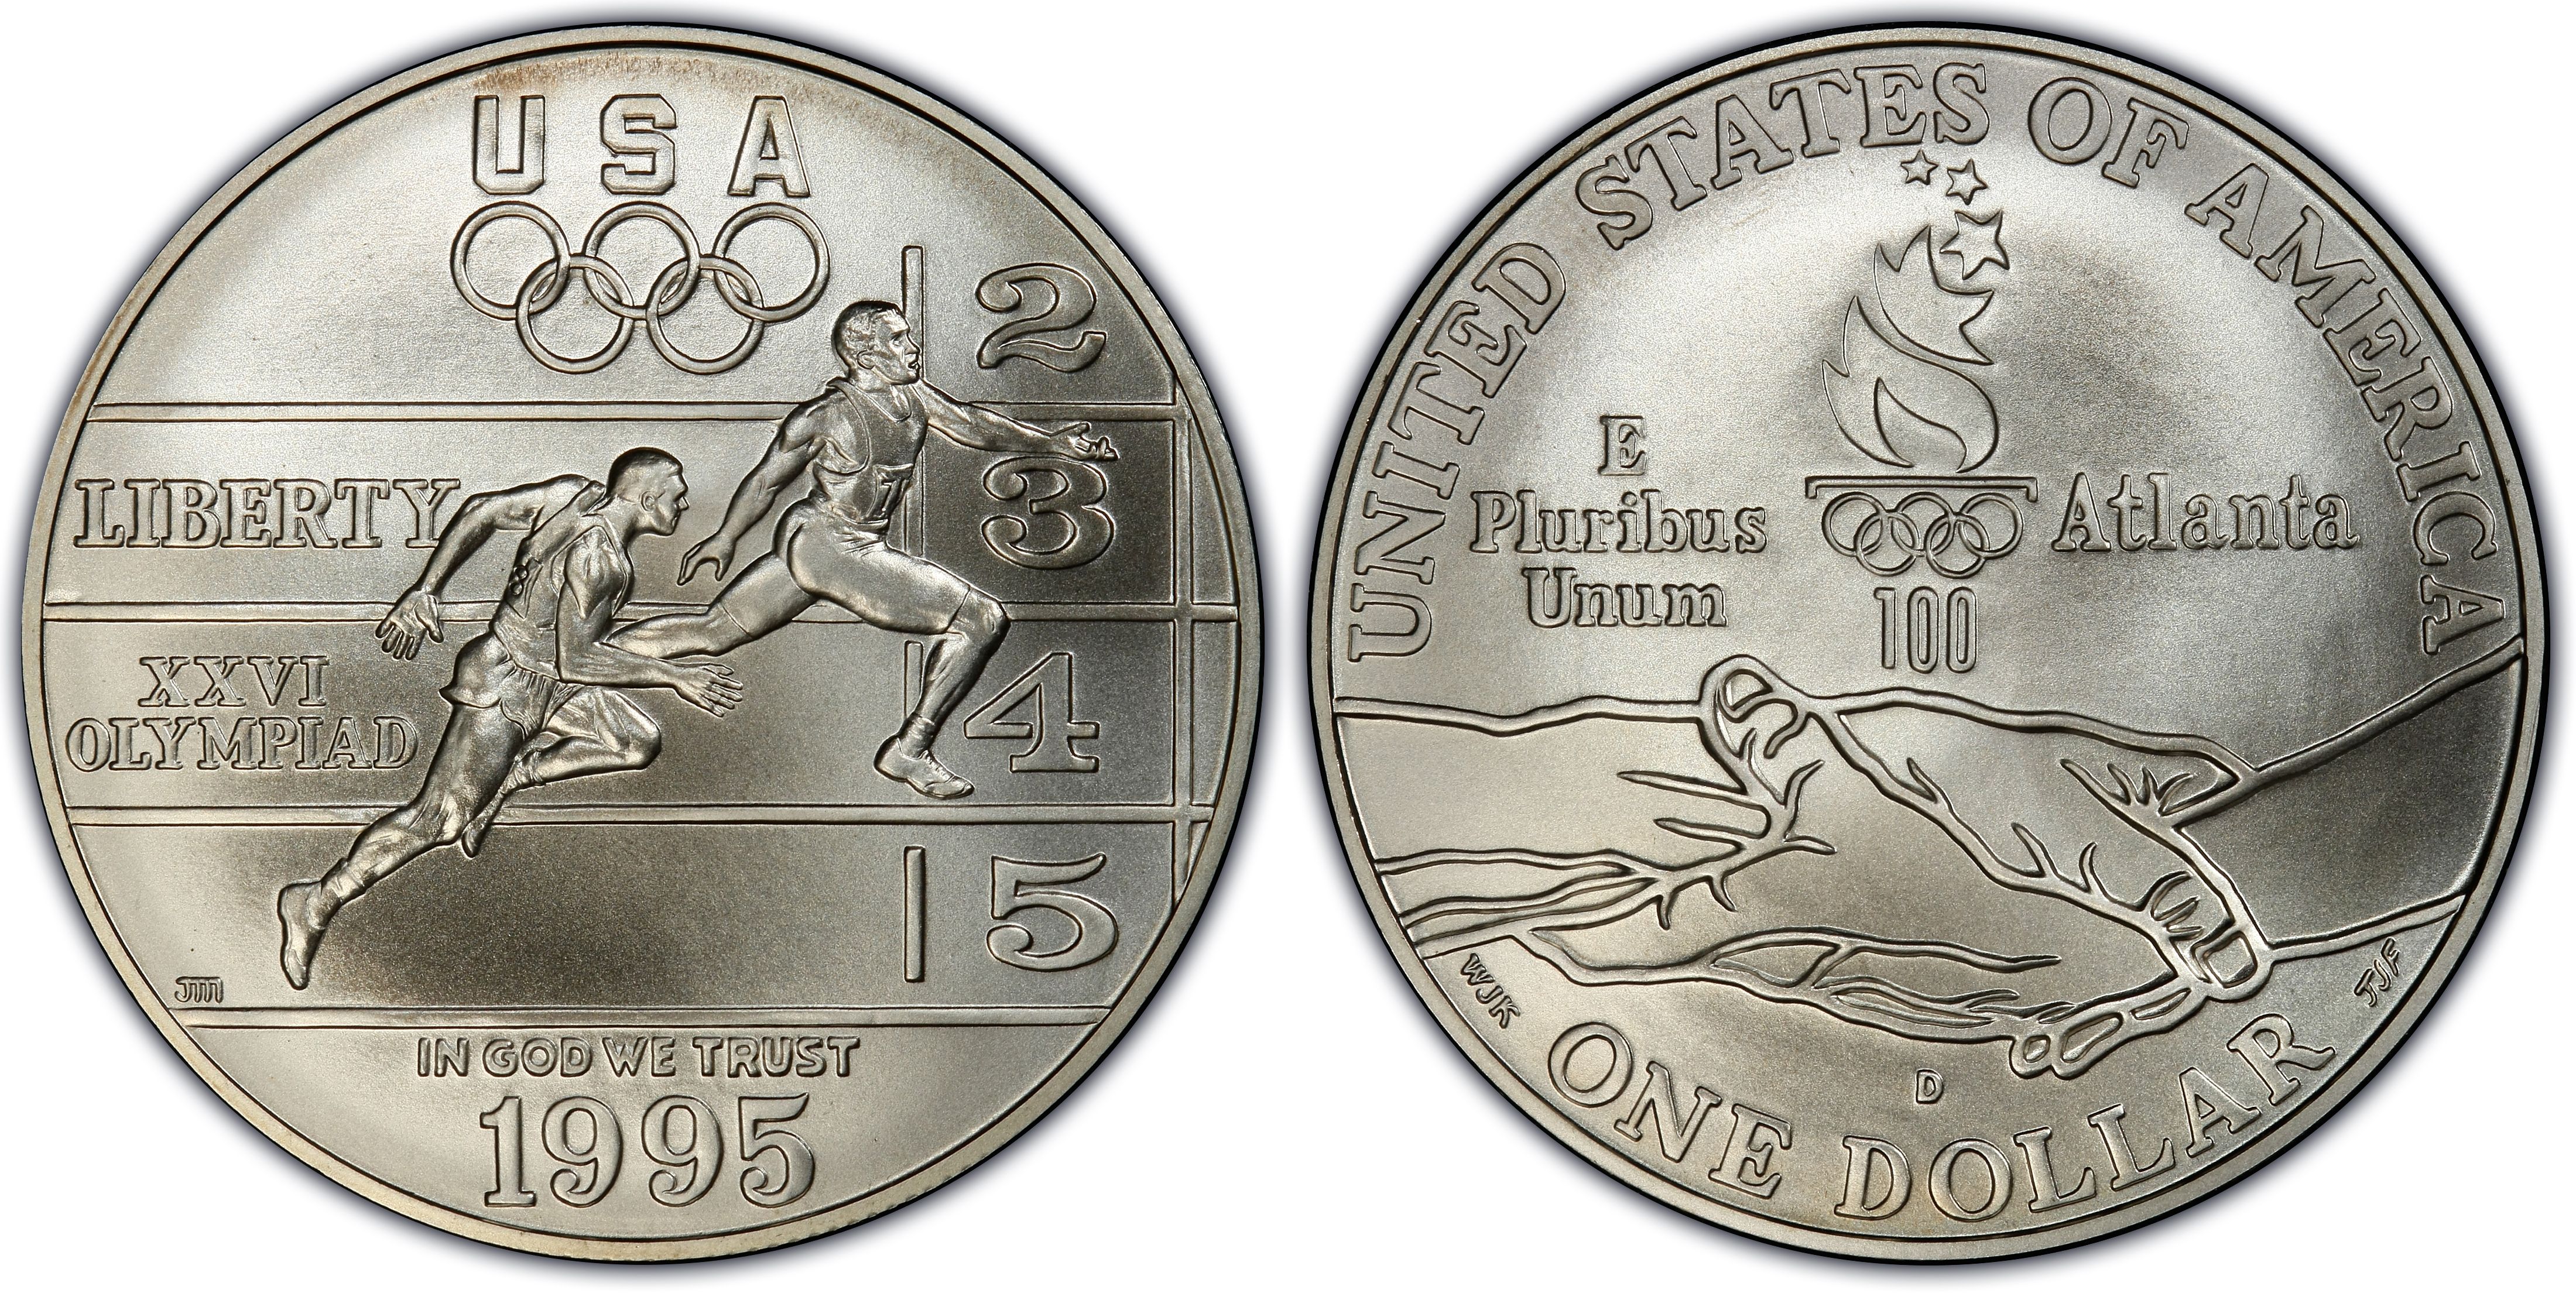 Olympic Track Field Silver Commemorative Dollar PCGS PR69DCAM 1995 P $1 U.S